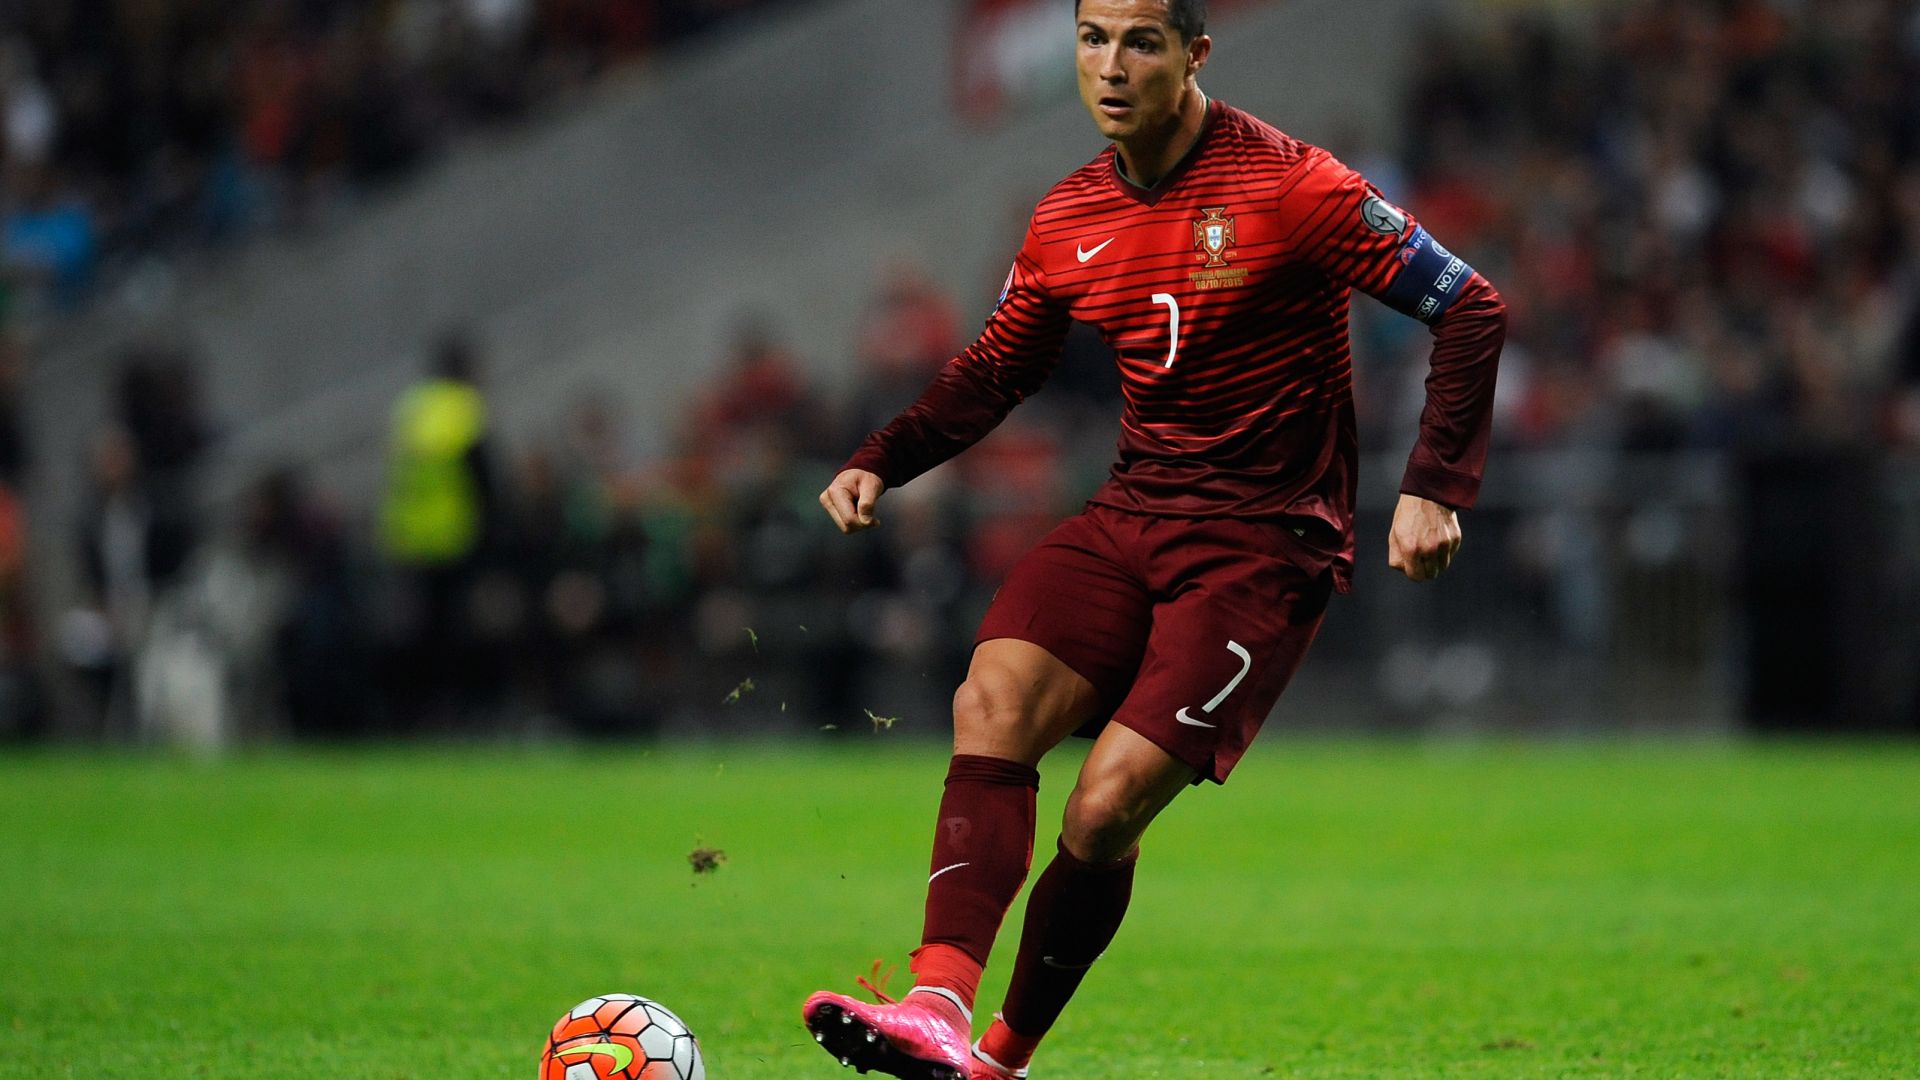 Wallpaper Cristiano Ronaldo Football player